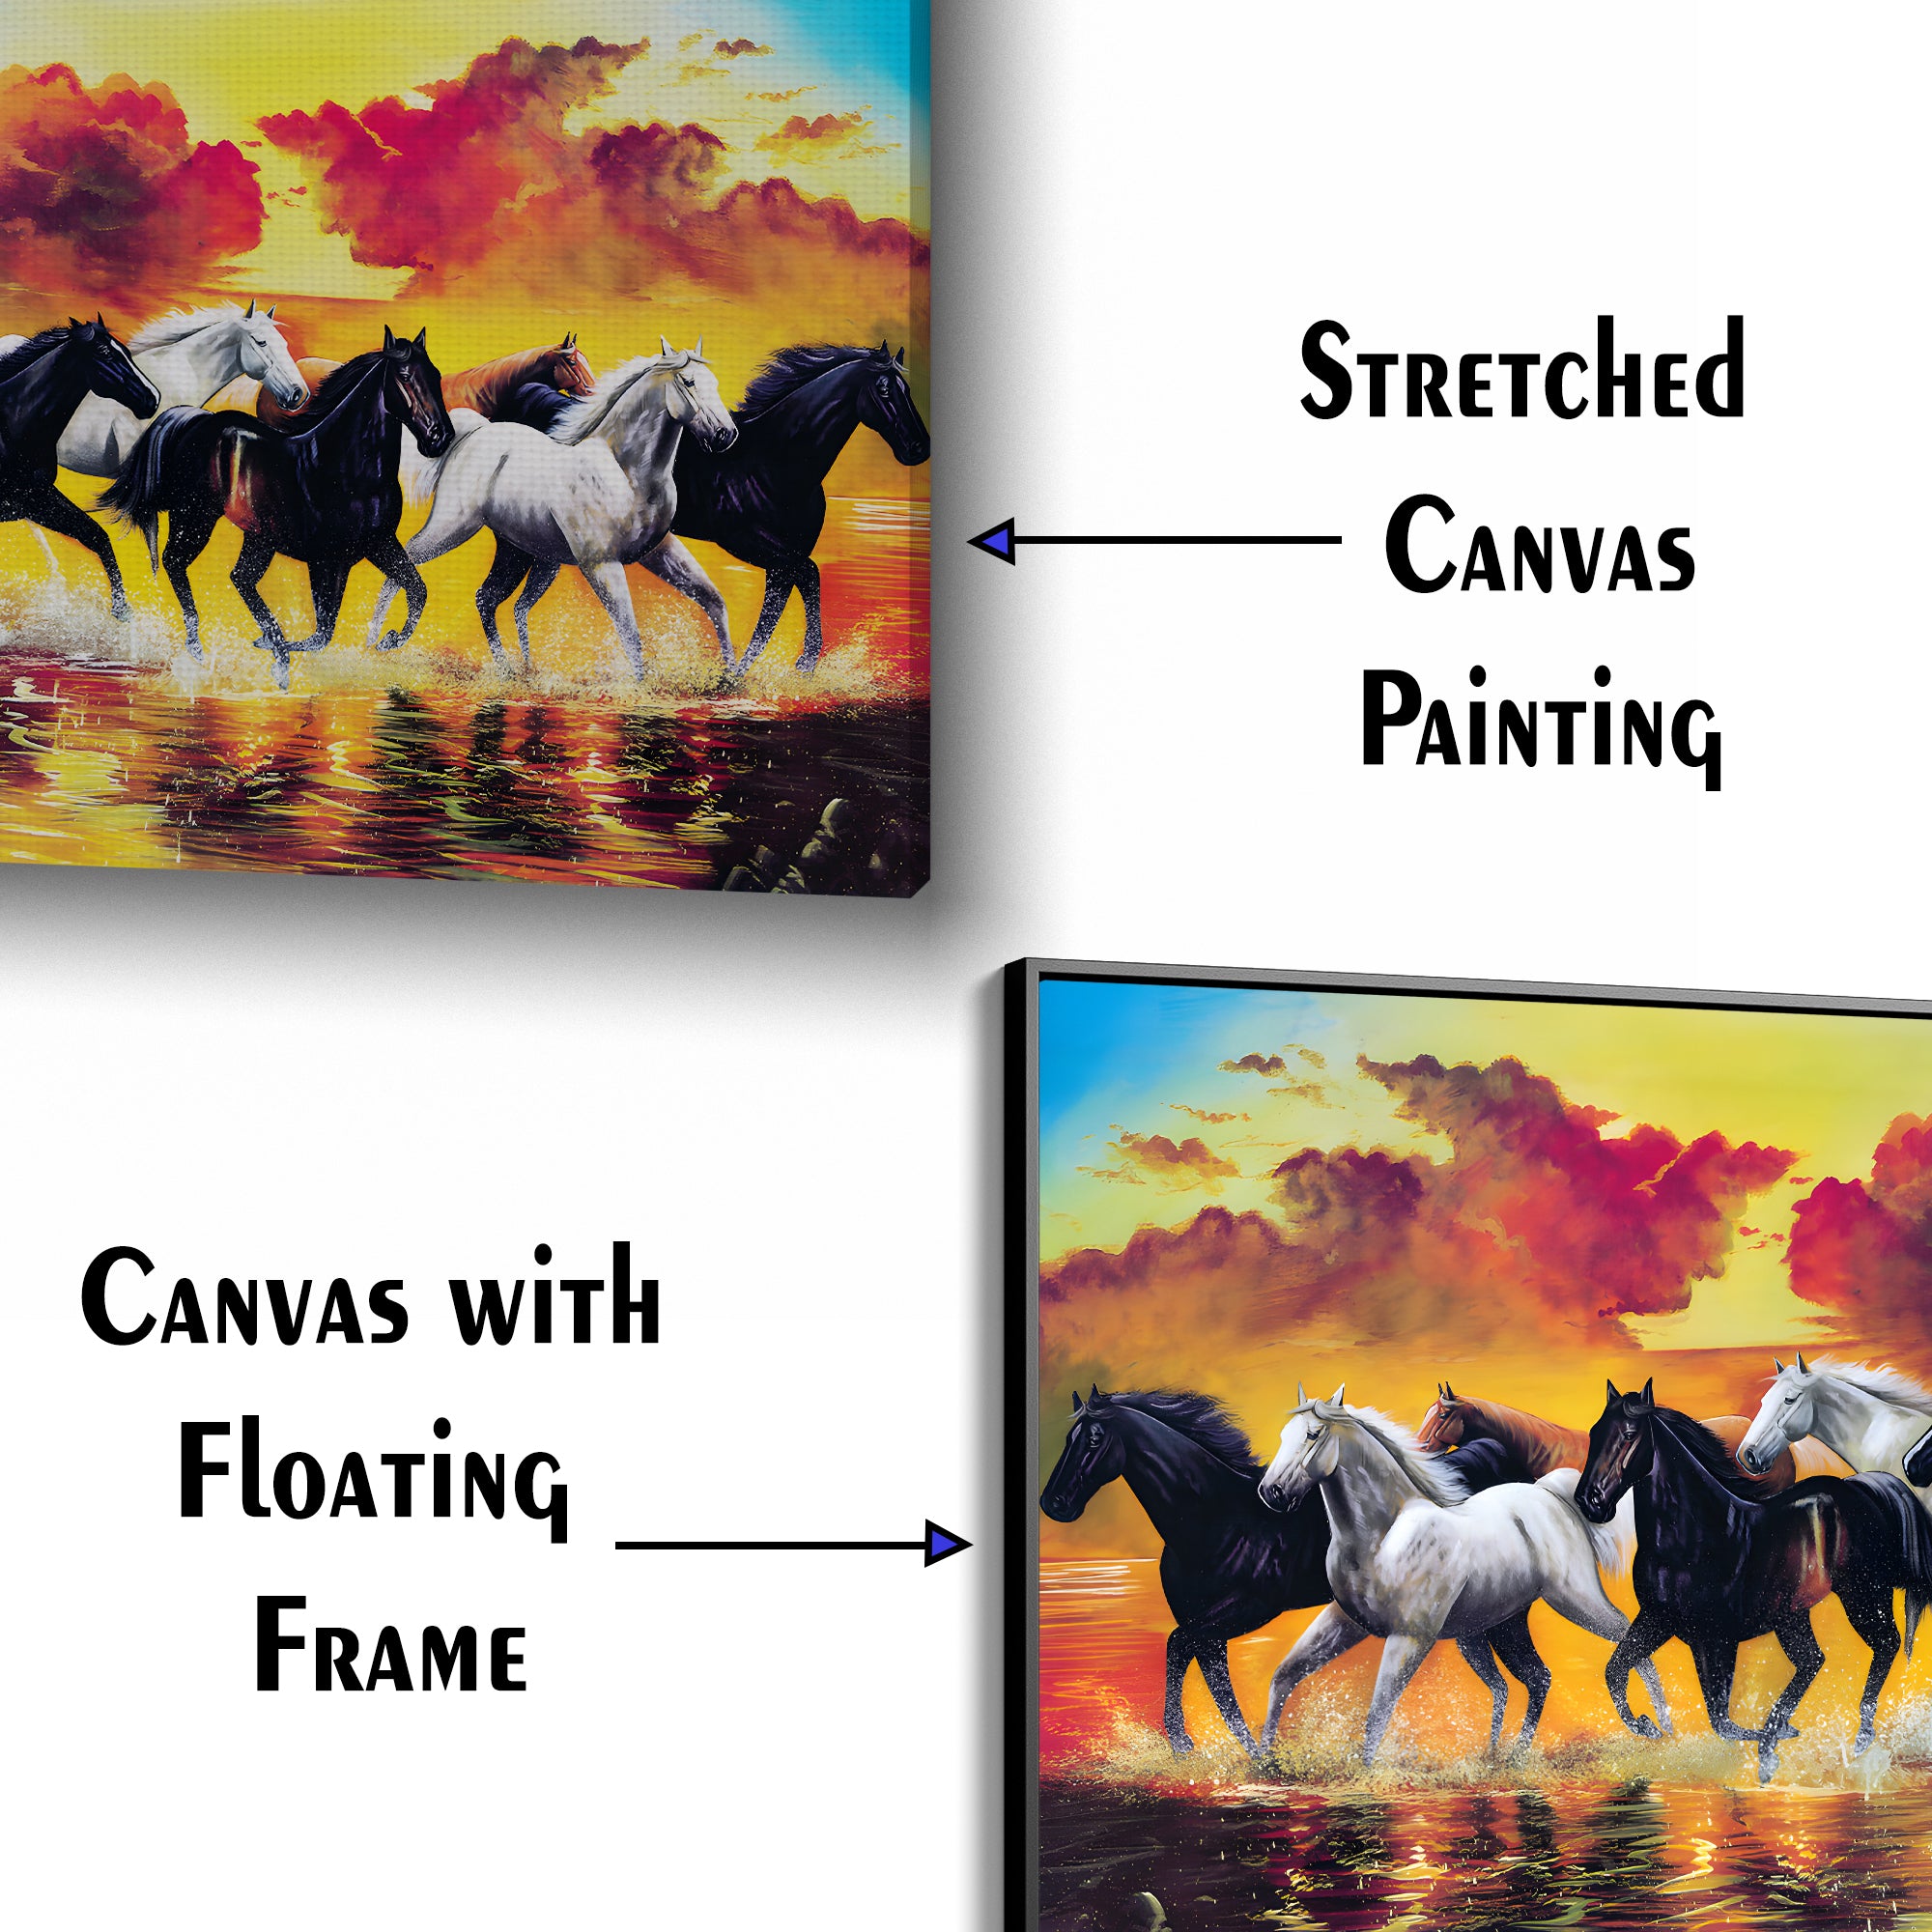 Panoramic Running Seven Horses Abstract Canvas Wall Painting